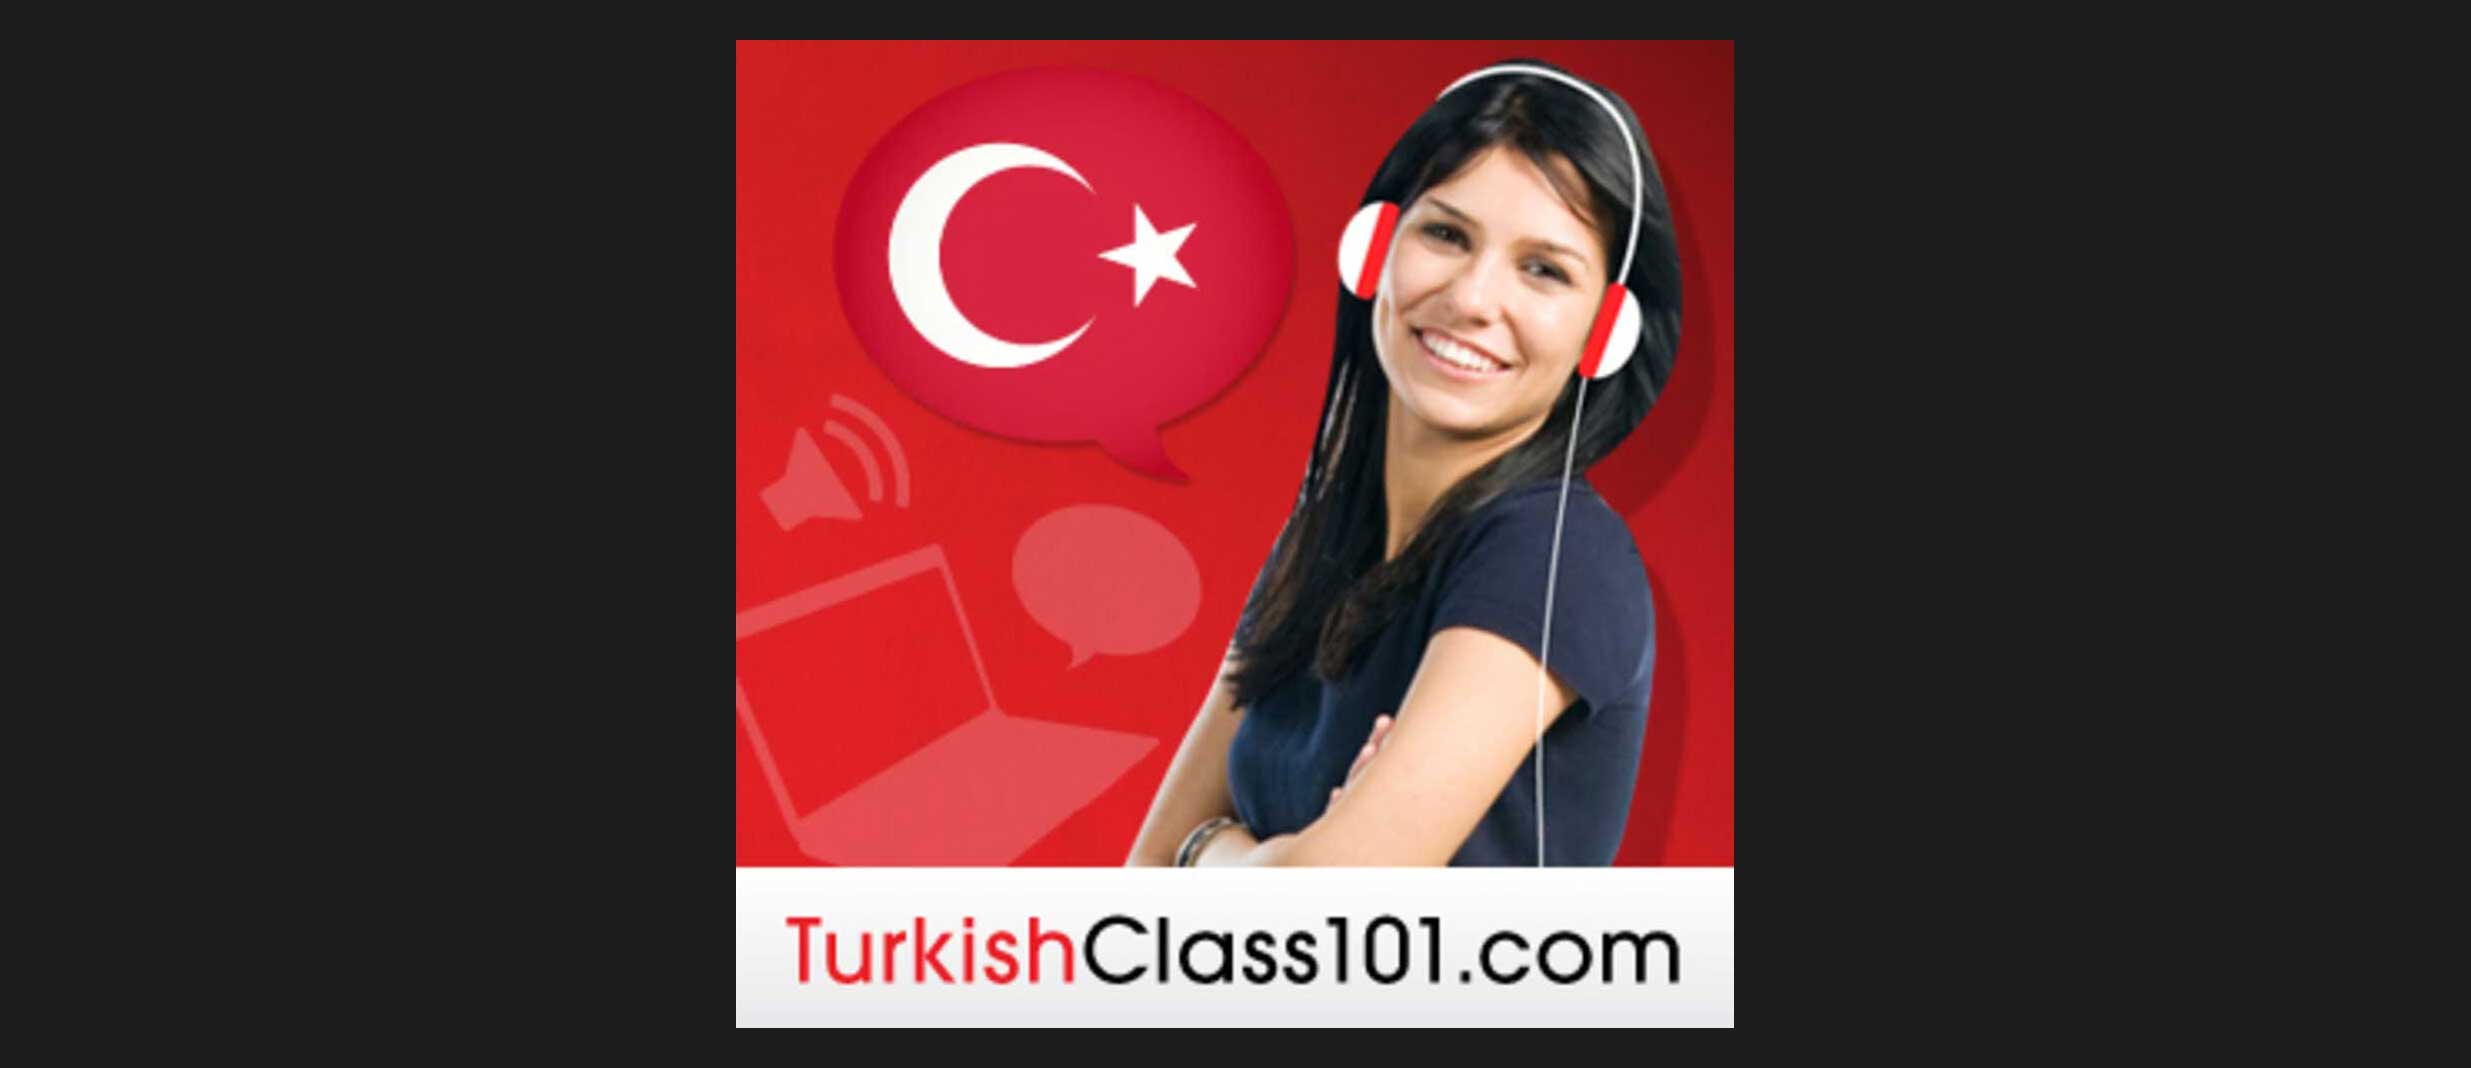 Learn Turkish With TurkishClass101.com